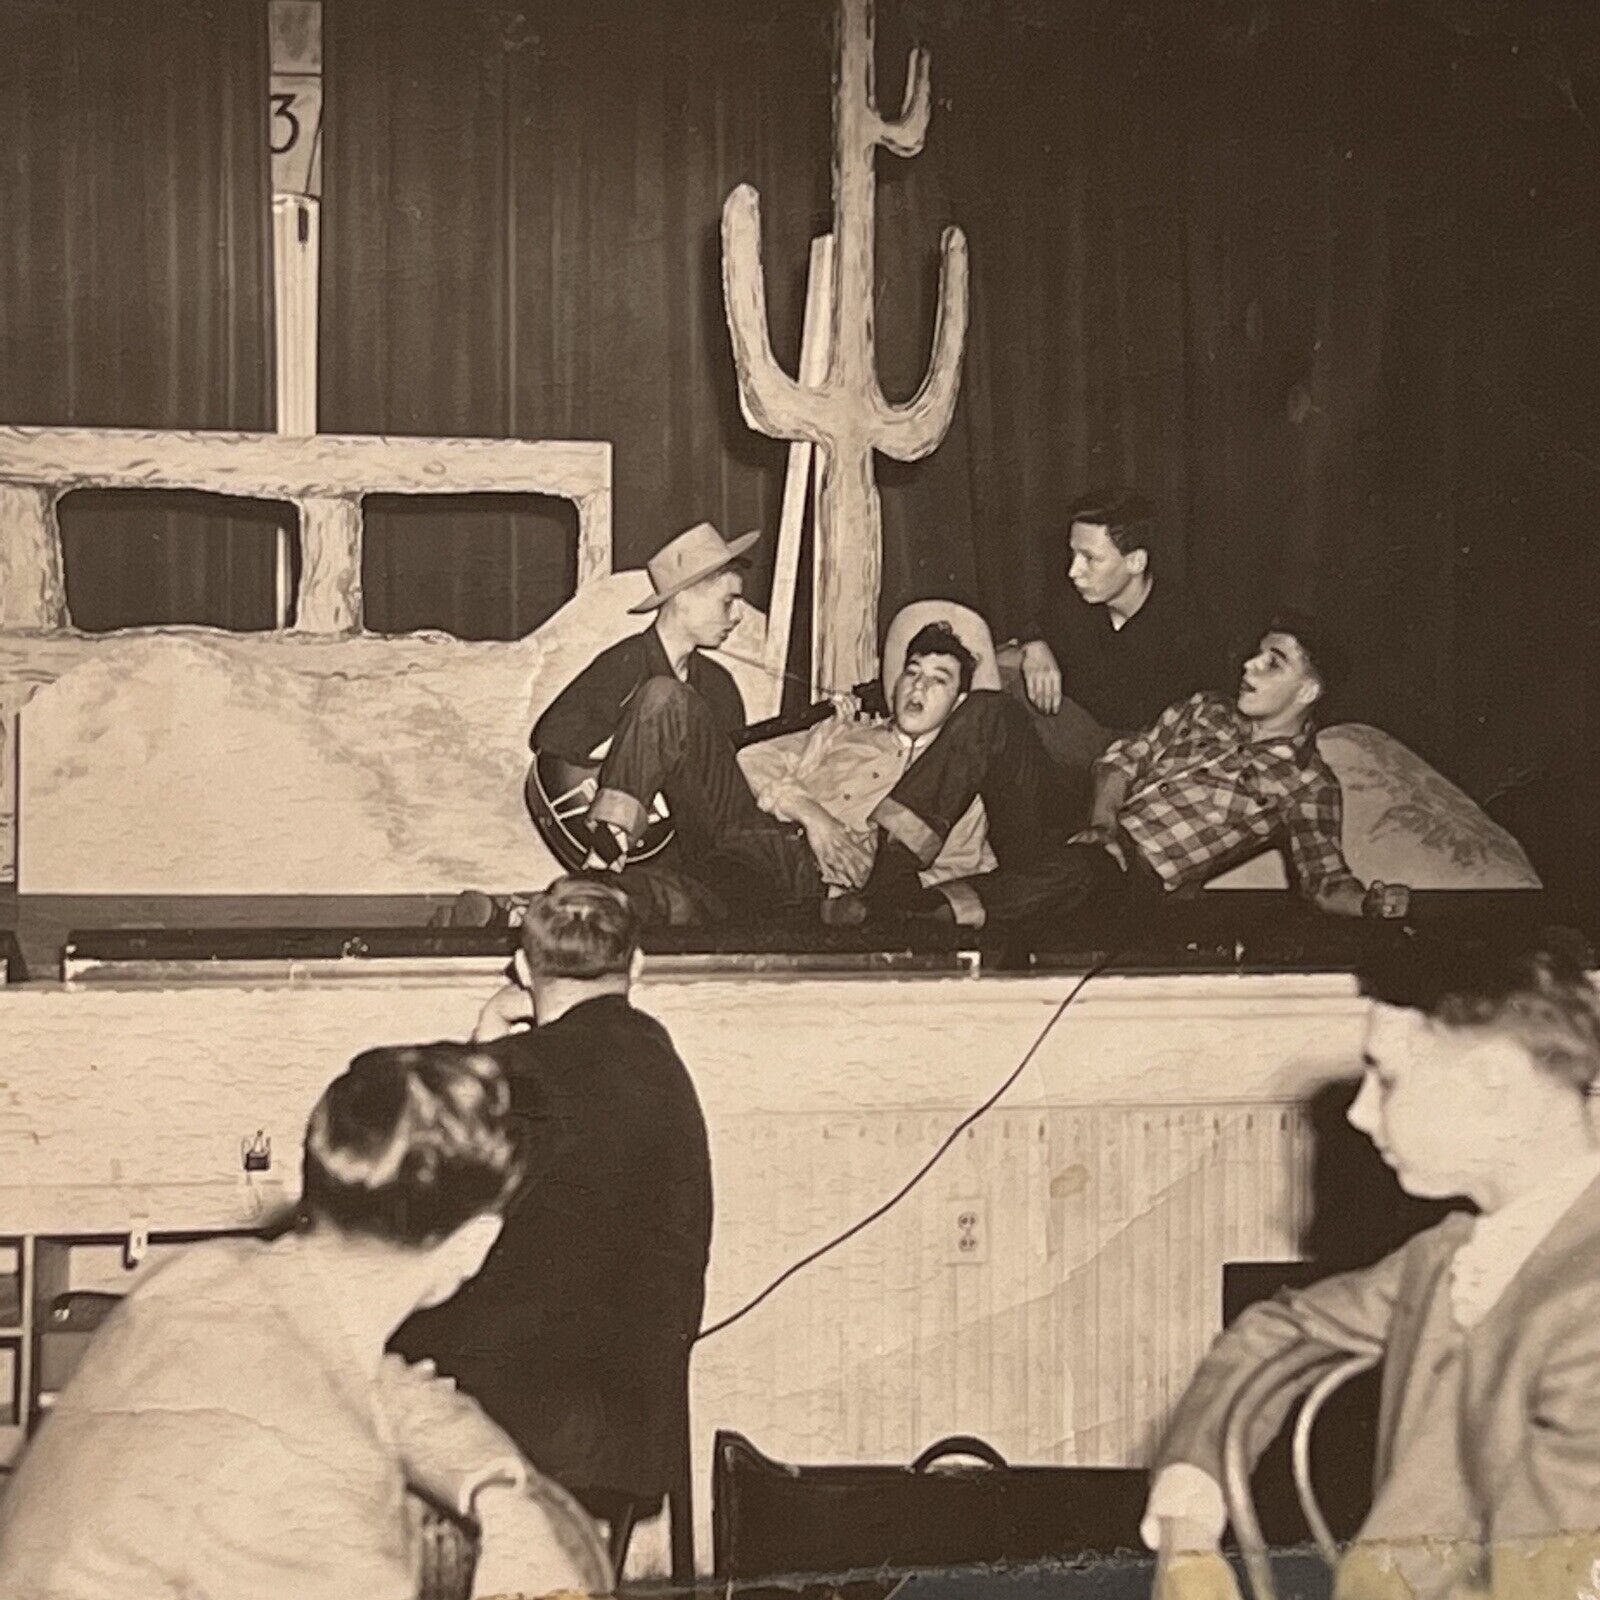 Vintage B&W Photograph Snapshot Cowboy Wild West Theatre High School Play Guitar